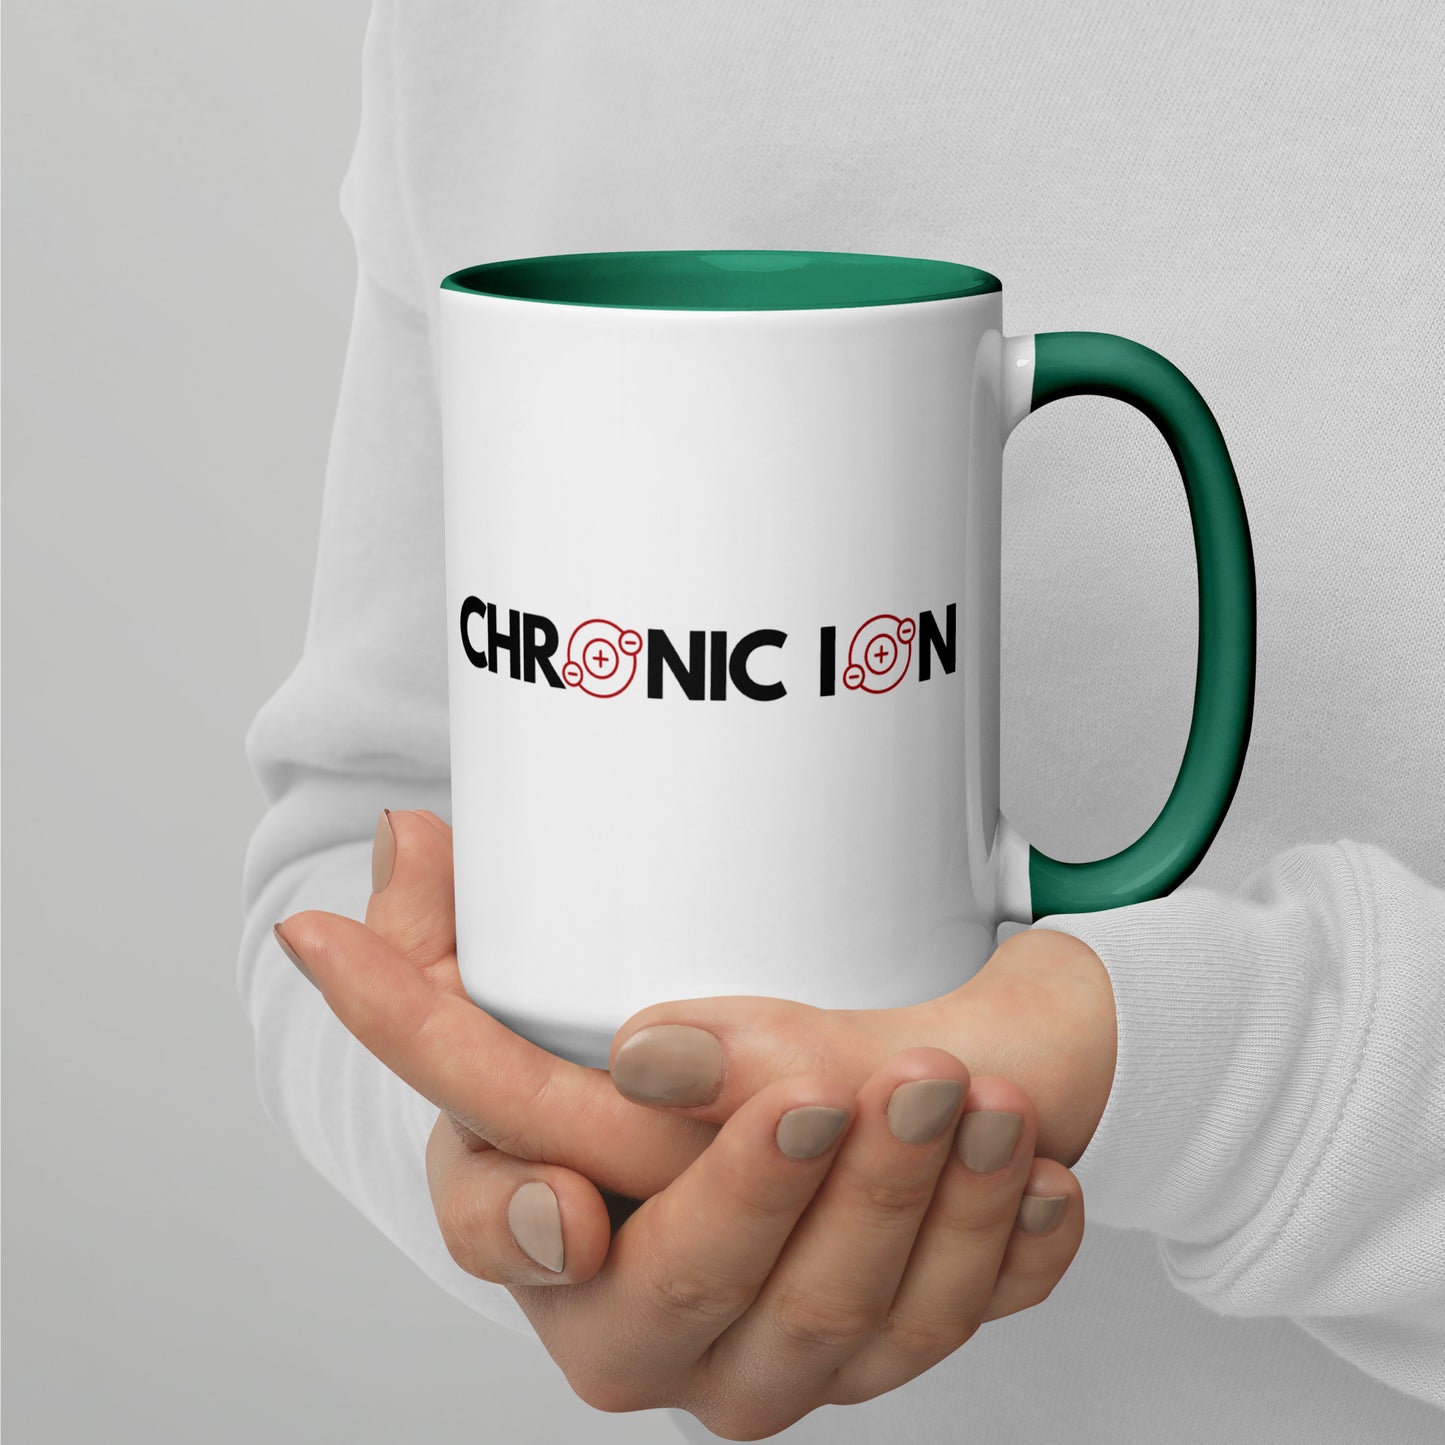 Chronic Ion Logo Mug With Color Inside